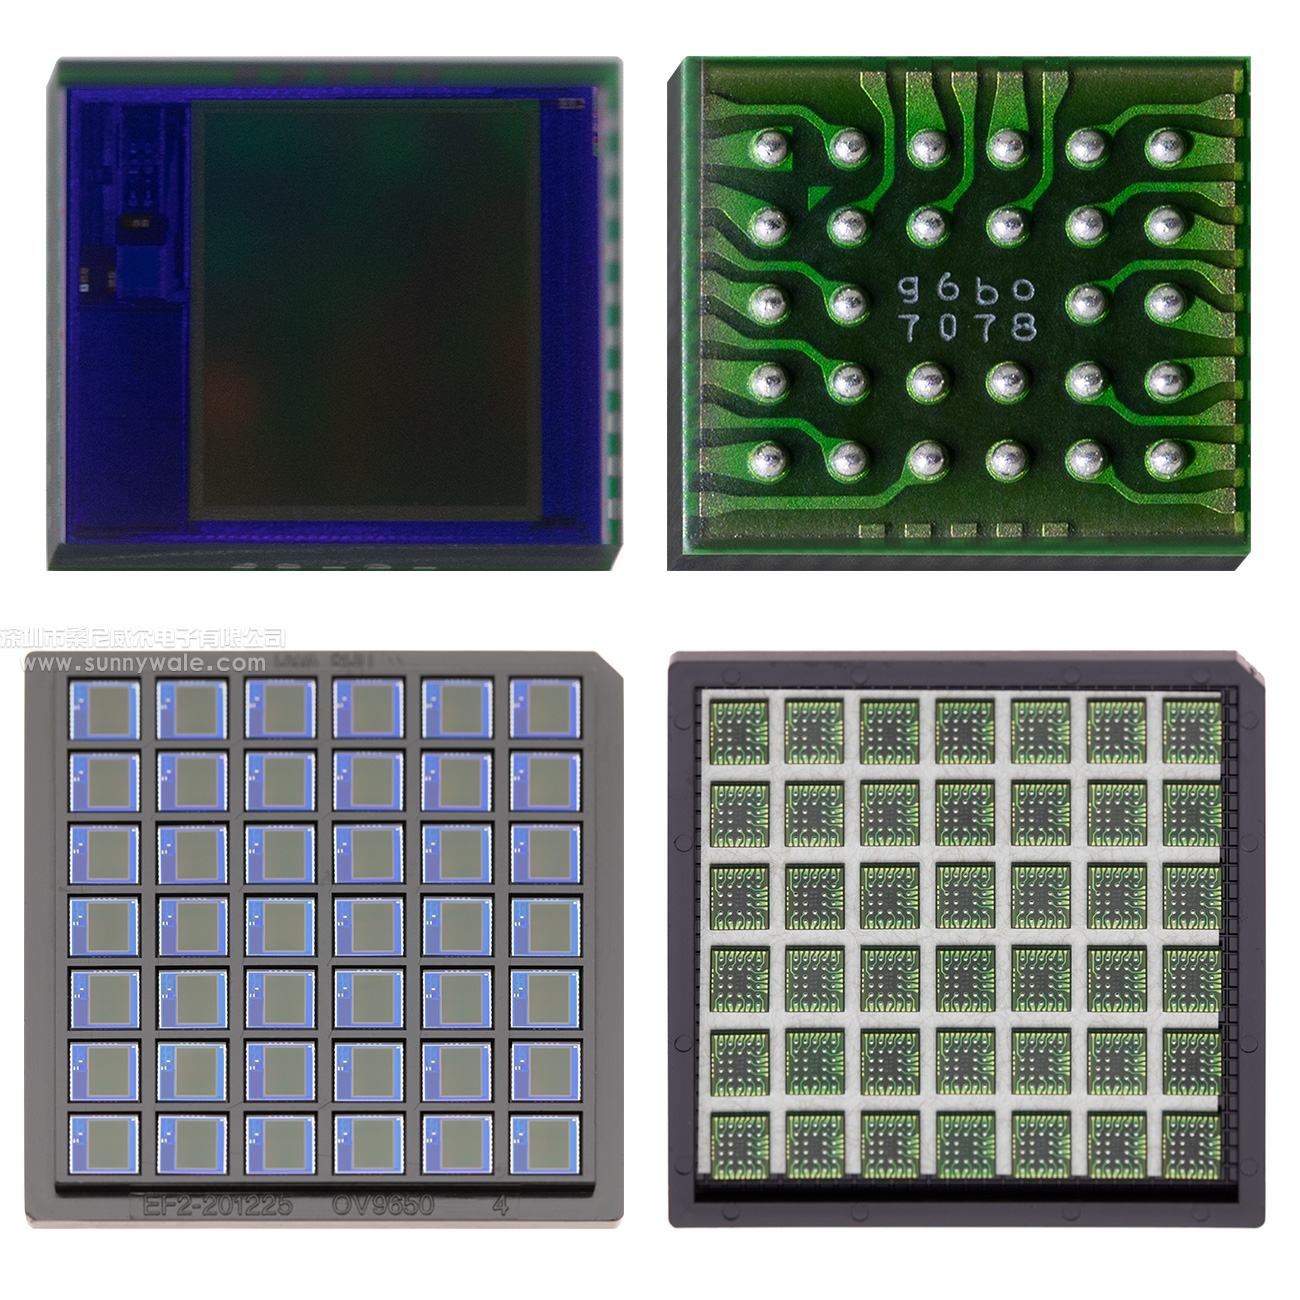 OV9650，OmniViSion，Color CMOS，SXGA (1.3 MegaPixel)，digital DSP Camera Chip ，CMOS image sensor with DSP， 1.3MP CMOS sensor，1280x1024P SENSOR